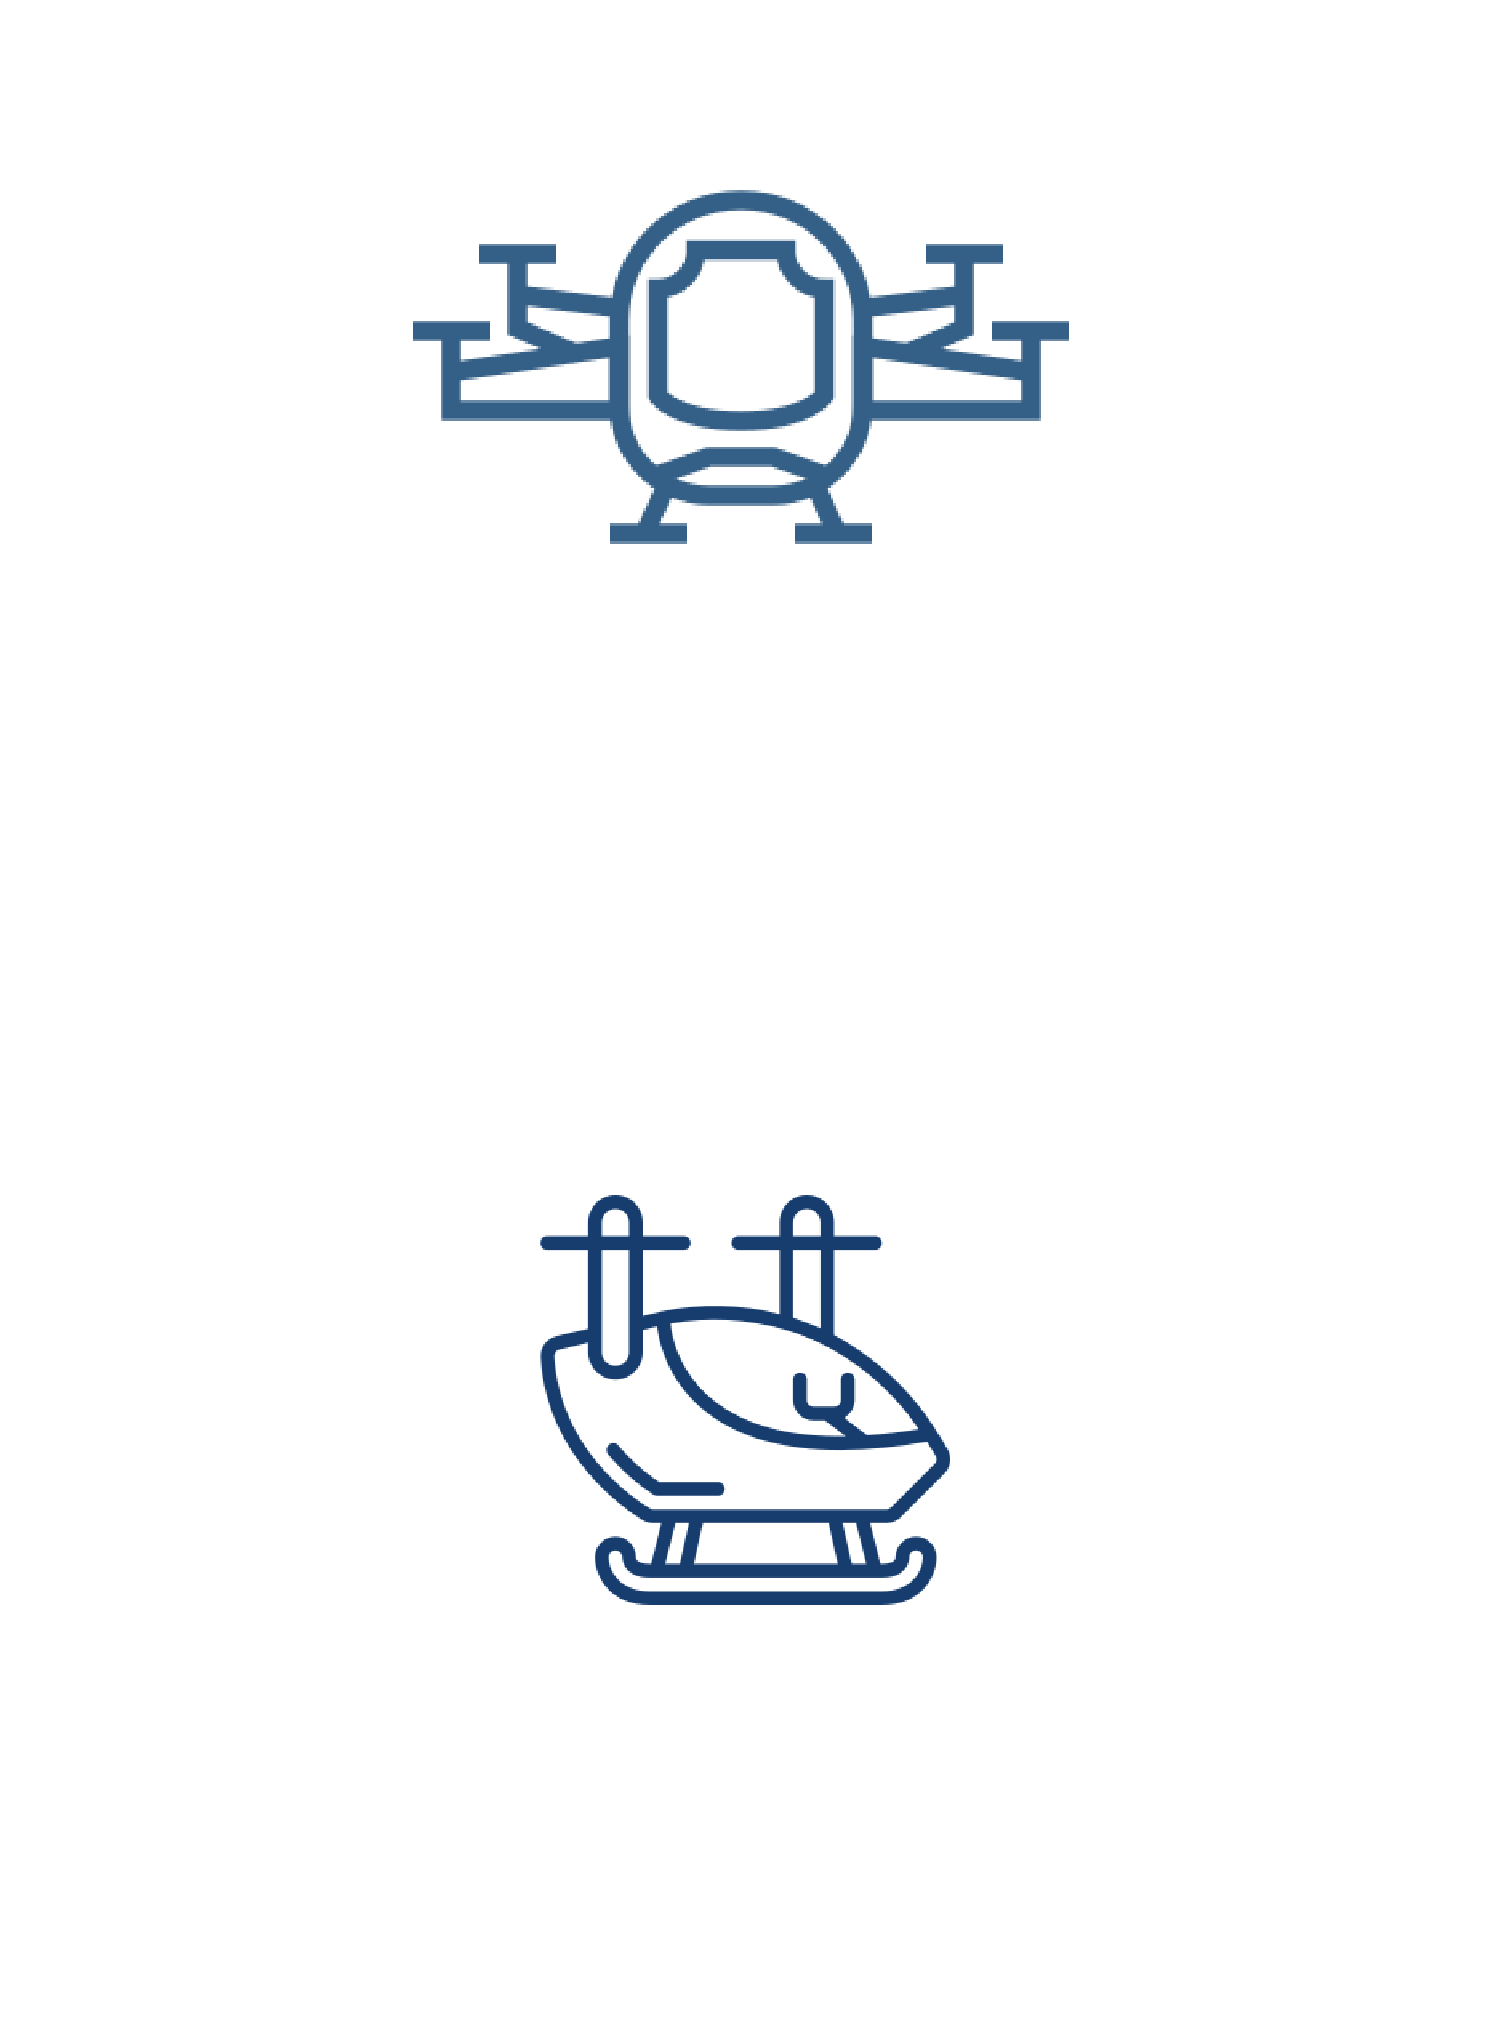 urban-air-mobility-infographicv2